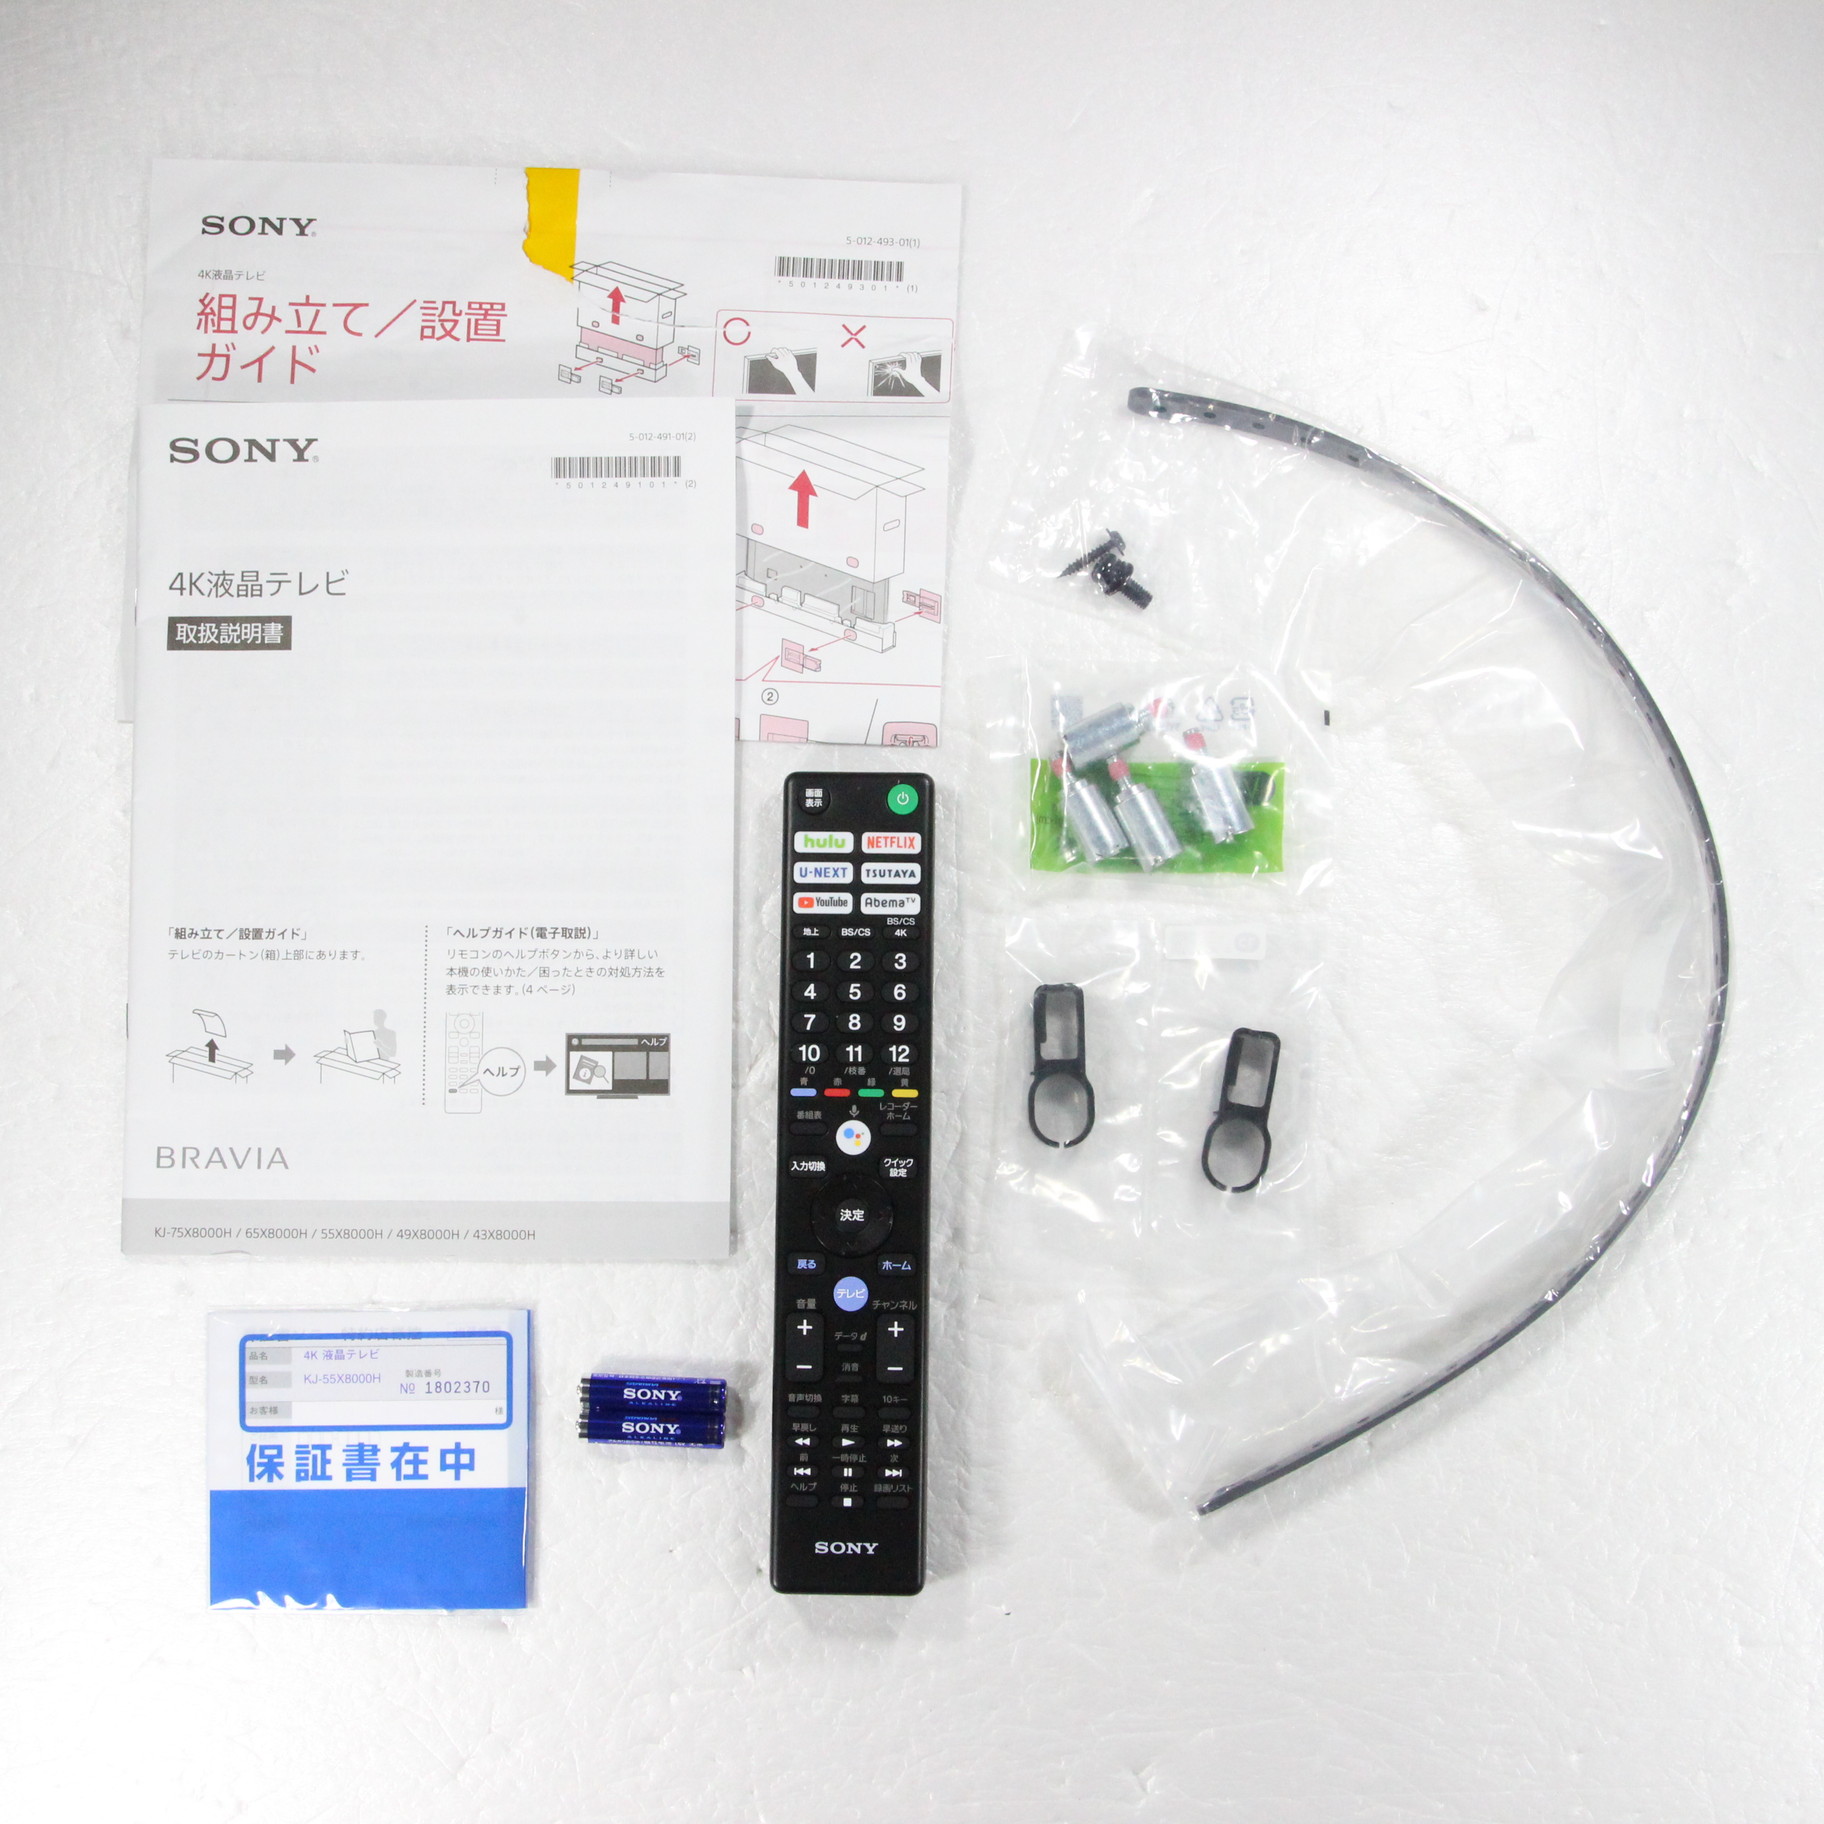 SONY ソニーブラビア KJ-43X8300D 4K 液晶テレビ+apple-en.jp